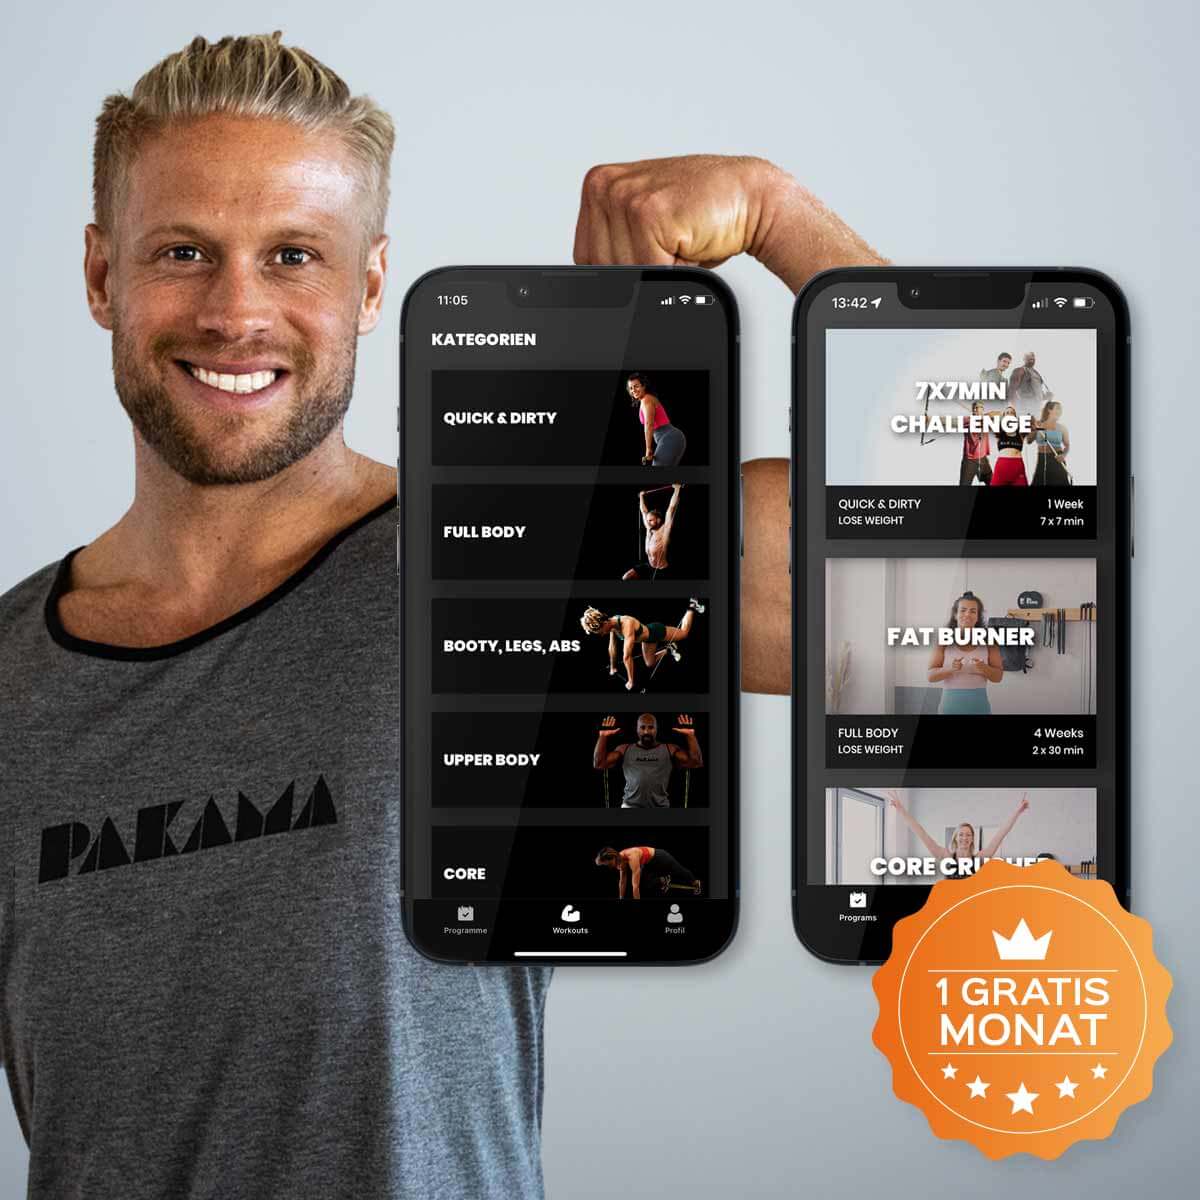 PAKAMA Fitnessstudio to Go (inkl. App) PAKAMA athletics